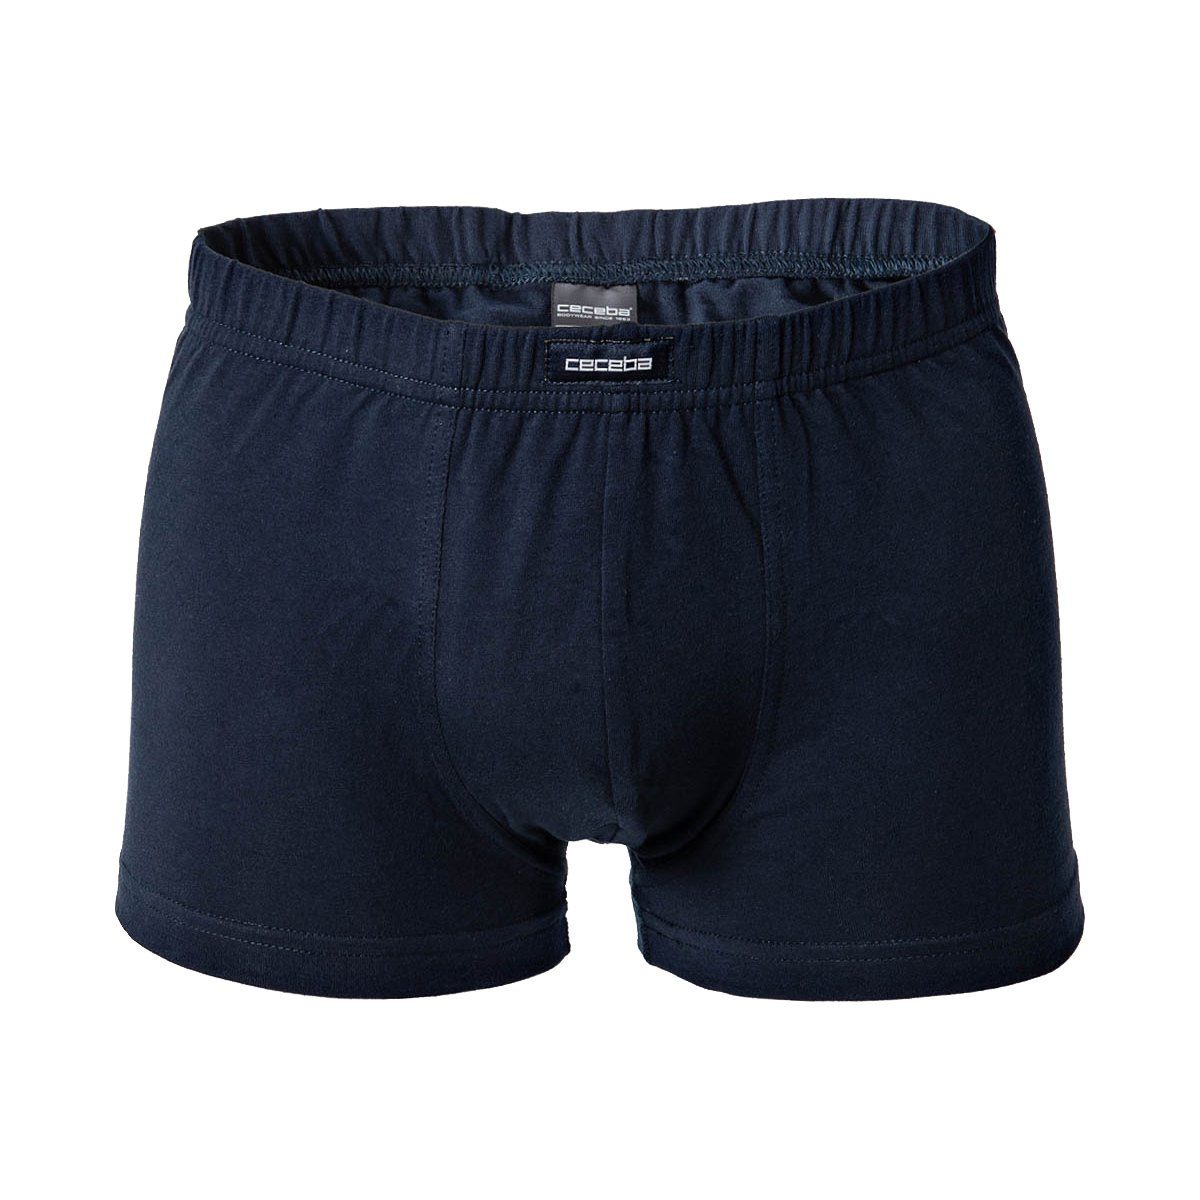 CECEBA Short Boxer Shorts, Pack Pants, 2er - Grau Herren Basic